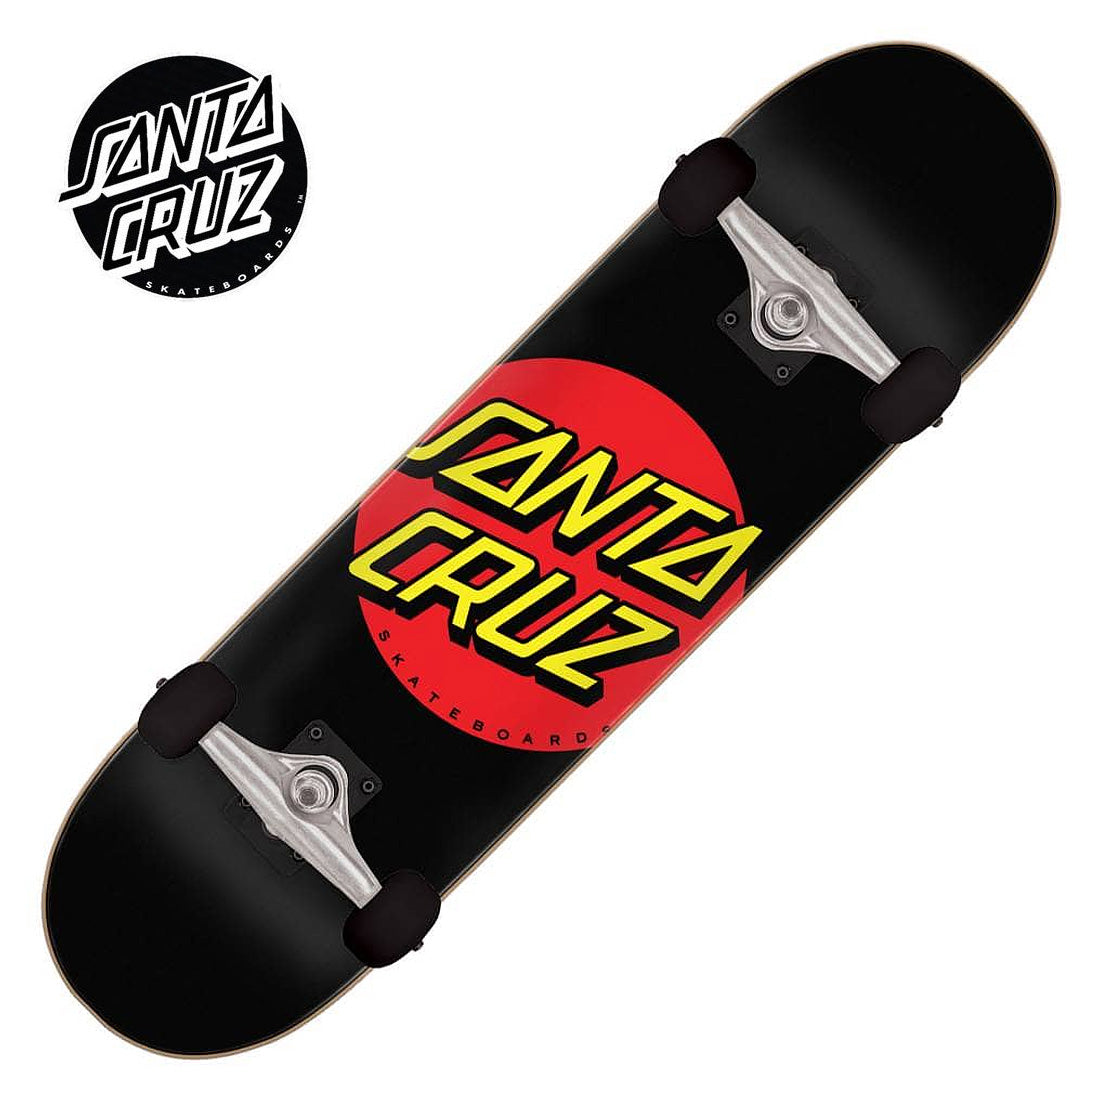 Santa Cruz Classic Dot 8.0 Complete - Black/Red Skateboard Completes Modern Street